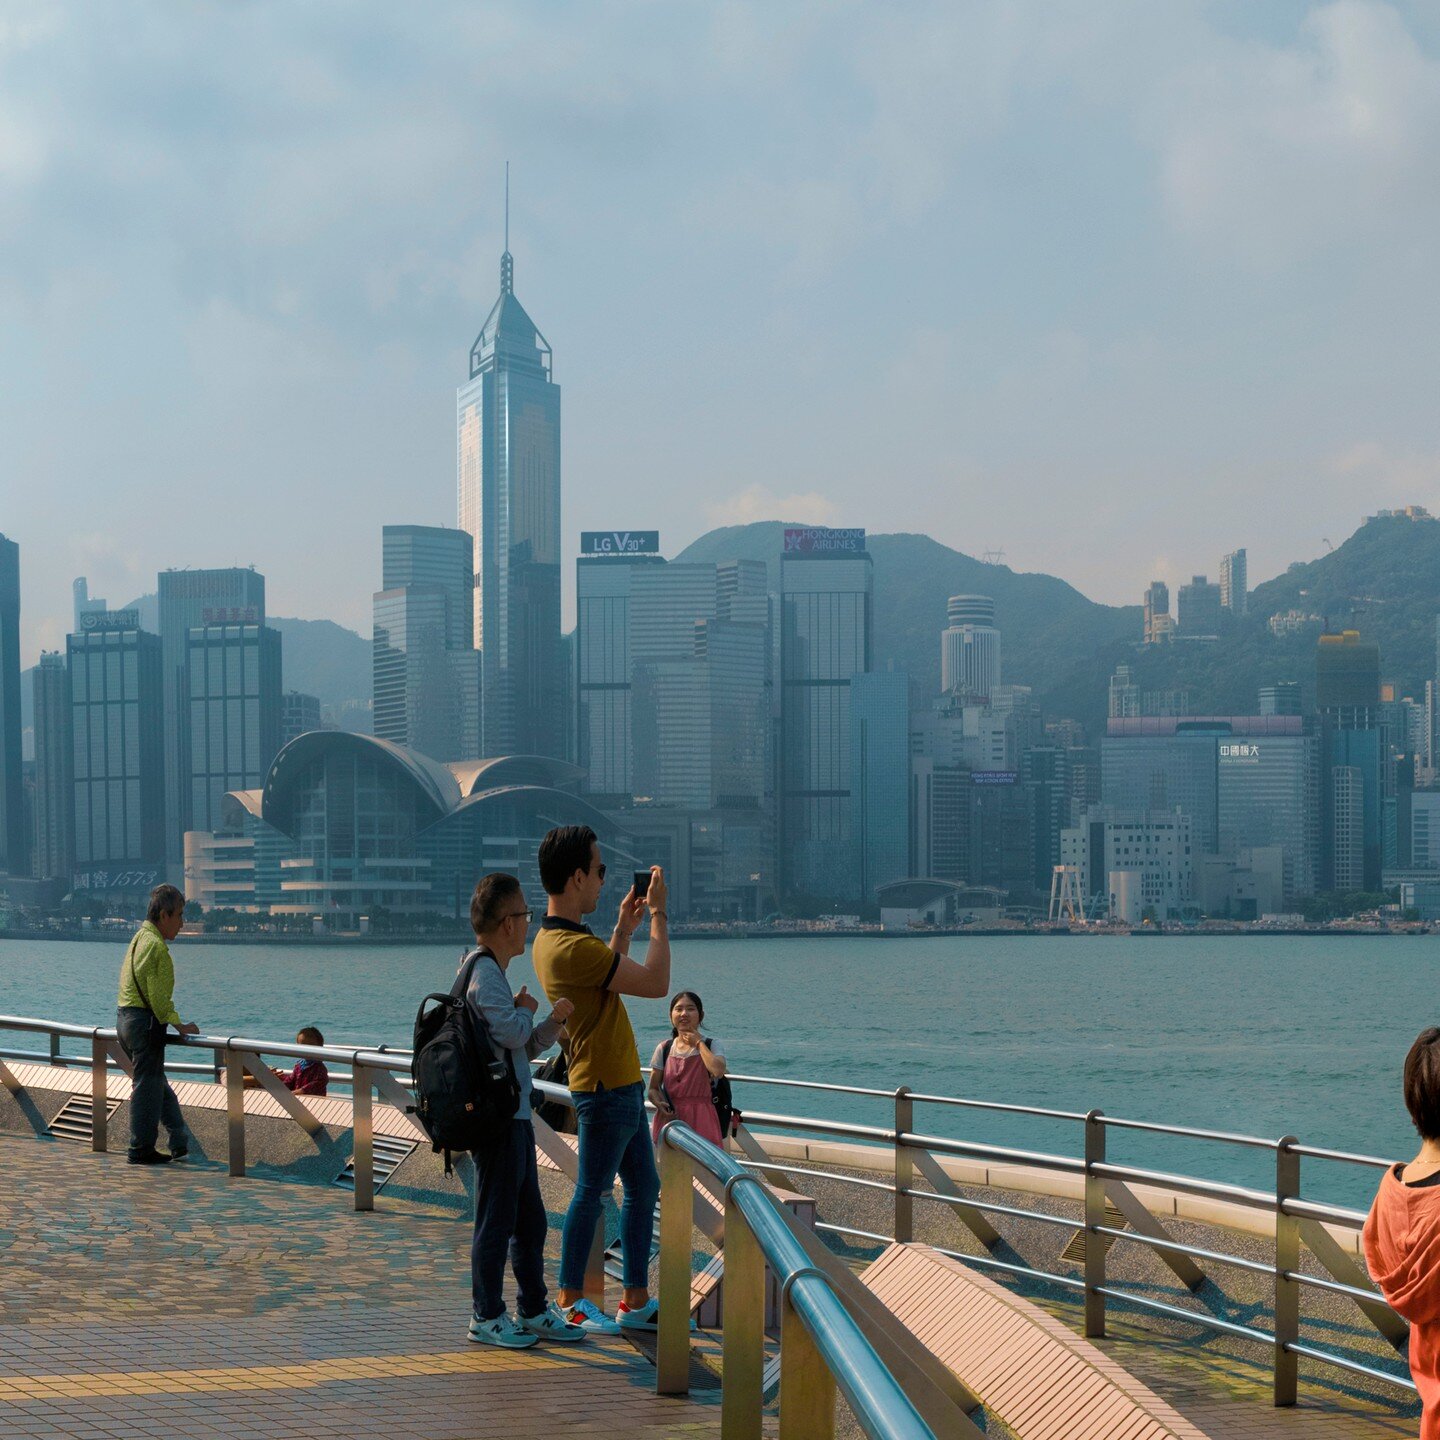 #hongkong #hongkongharbour #skyline #buildings #megacity